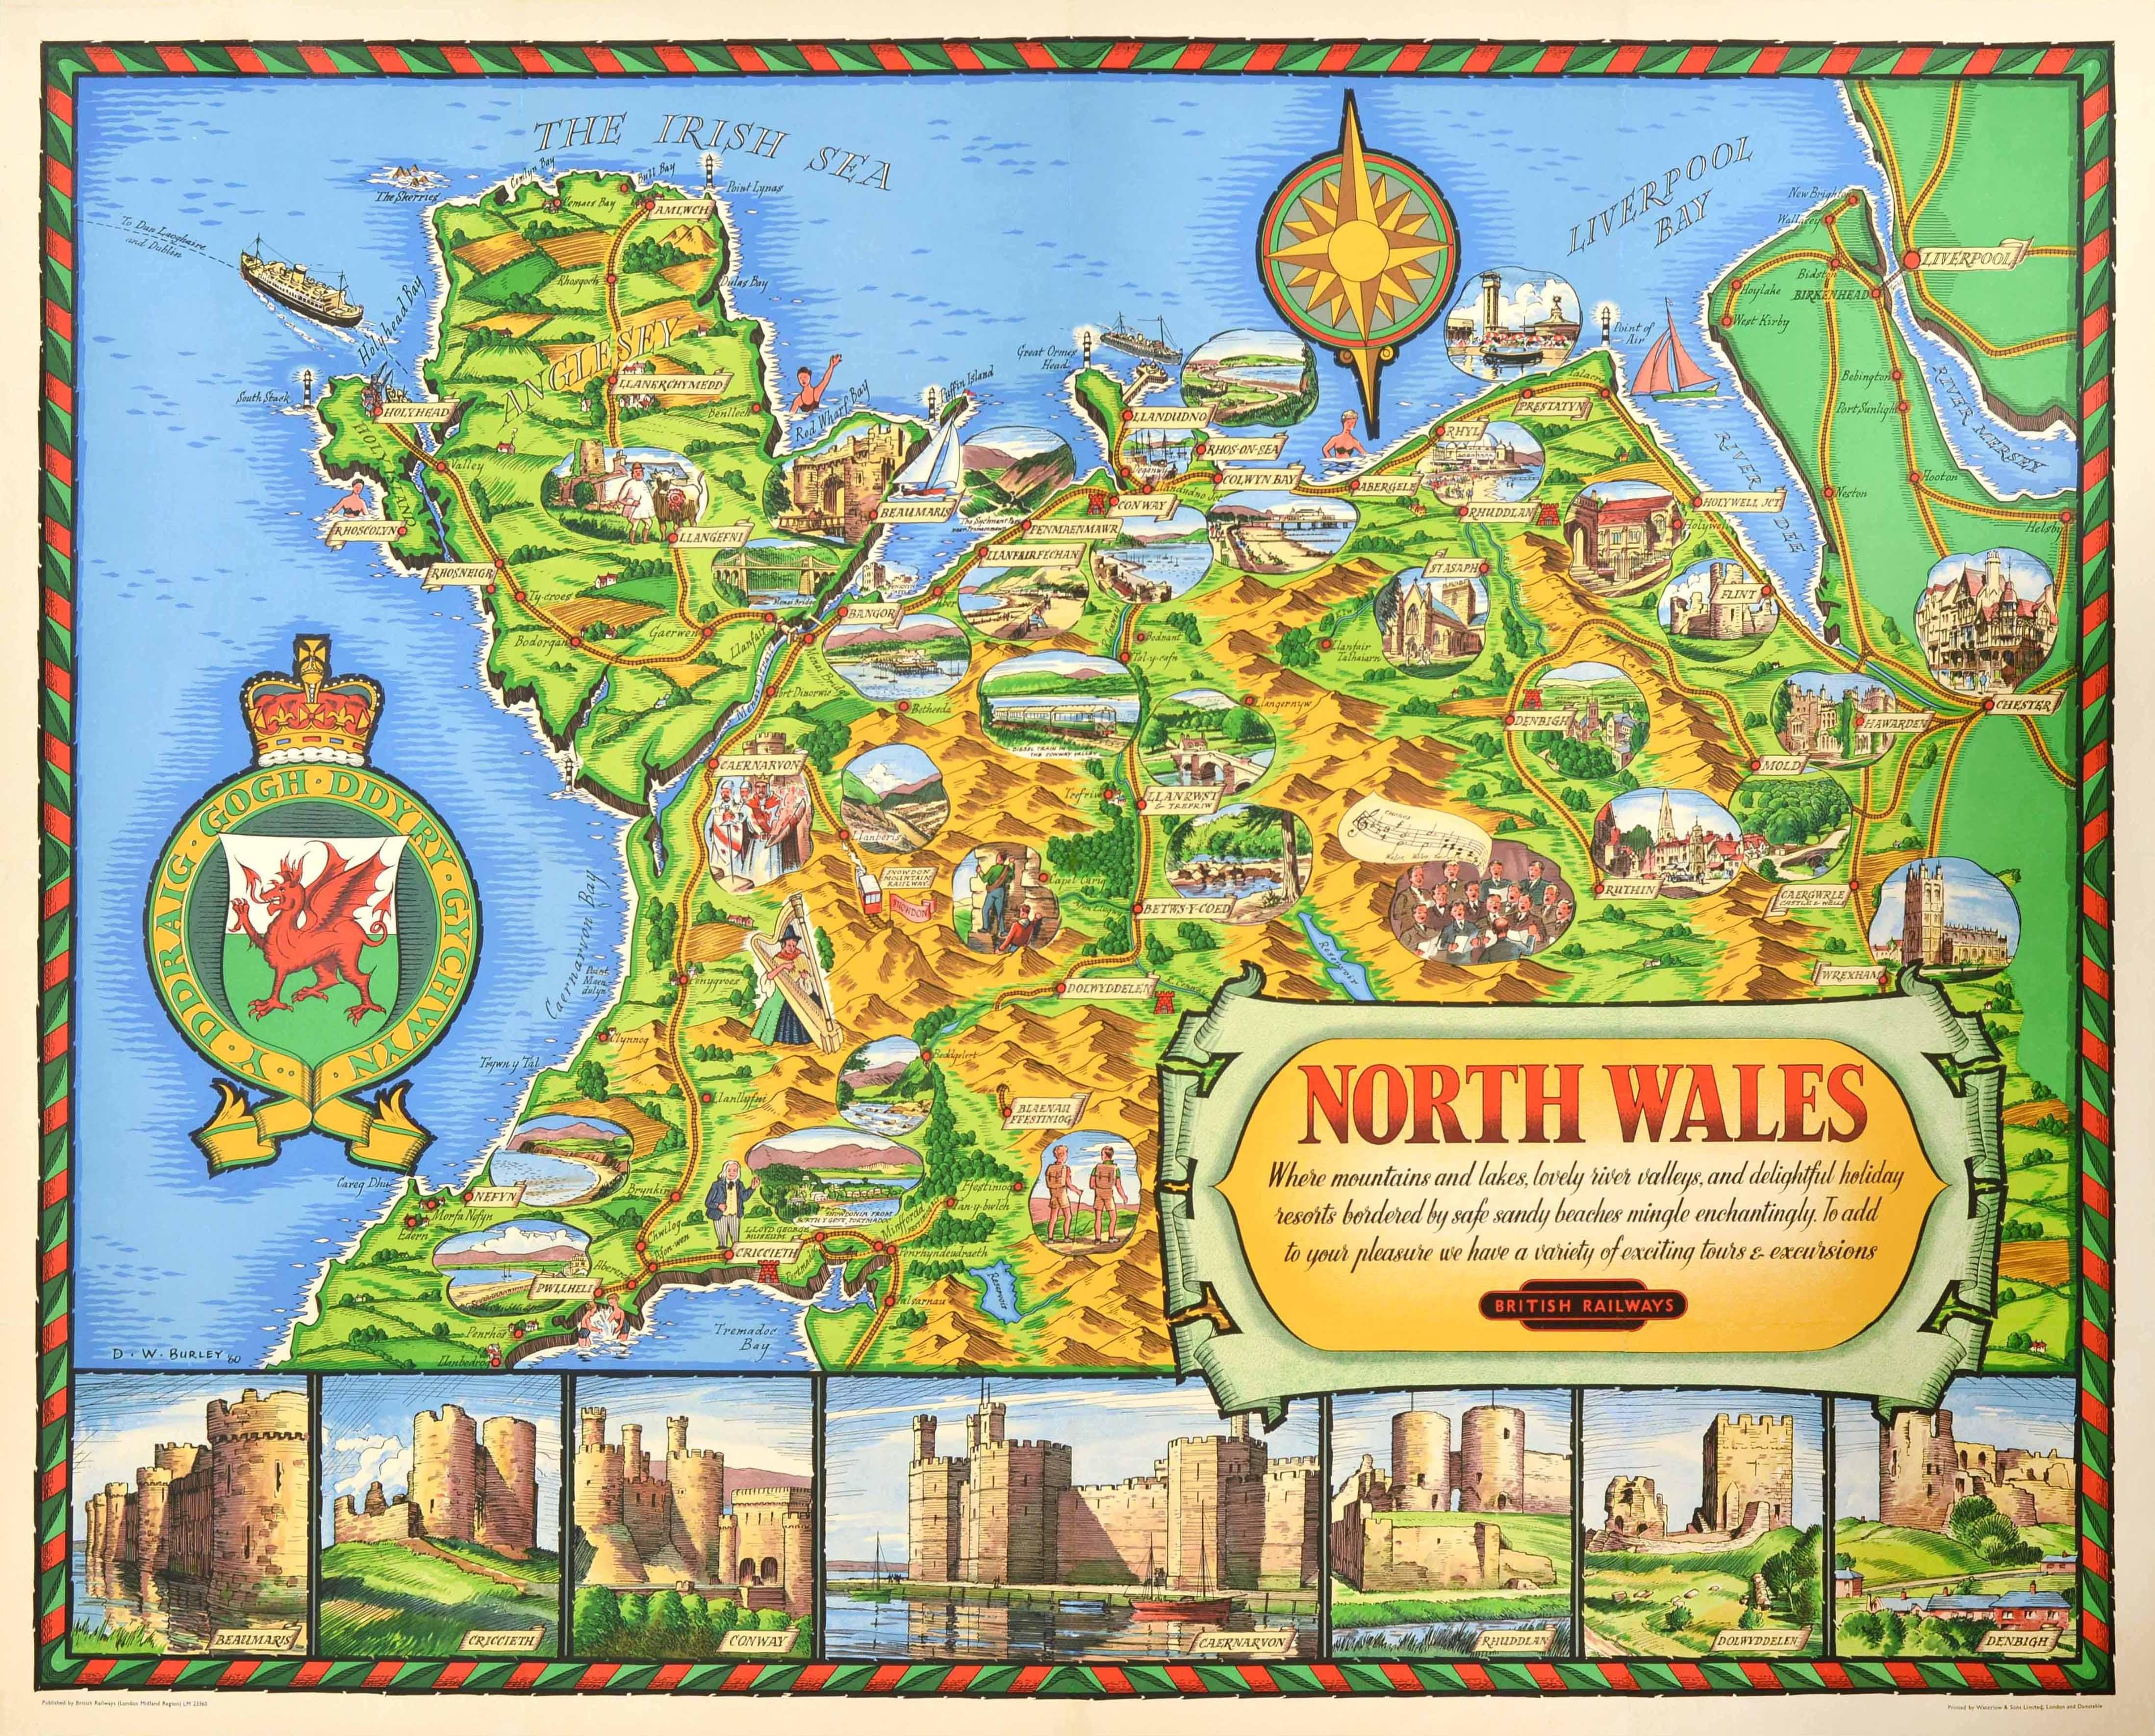 Unknown Print - Original Vintage Travel Poster North Wales Map British Railways DW Burley